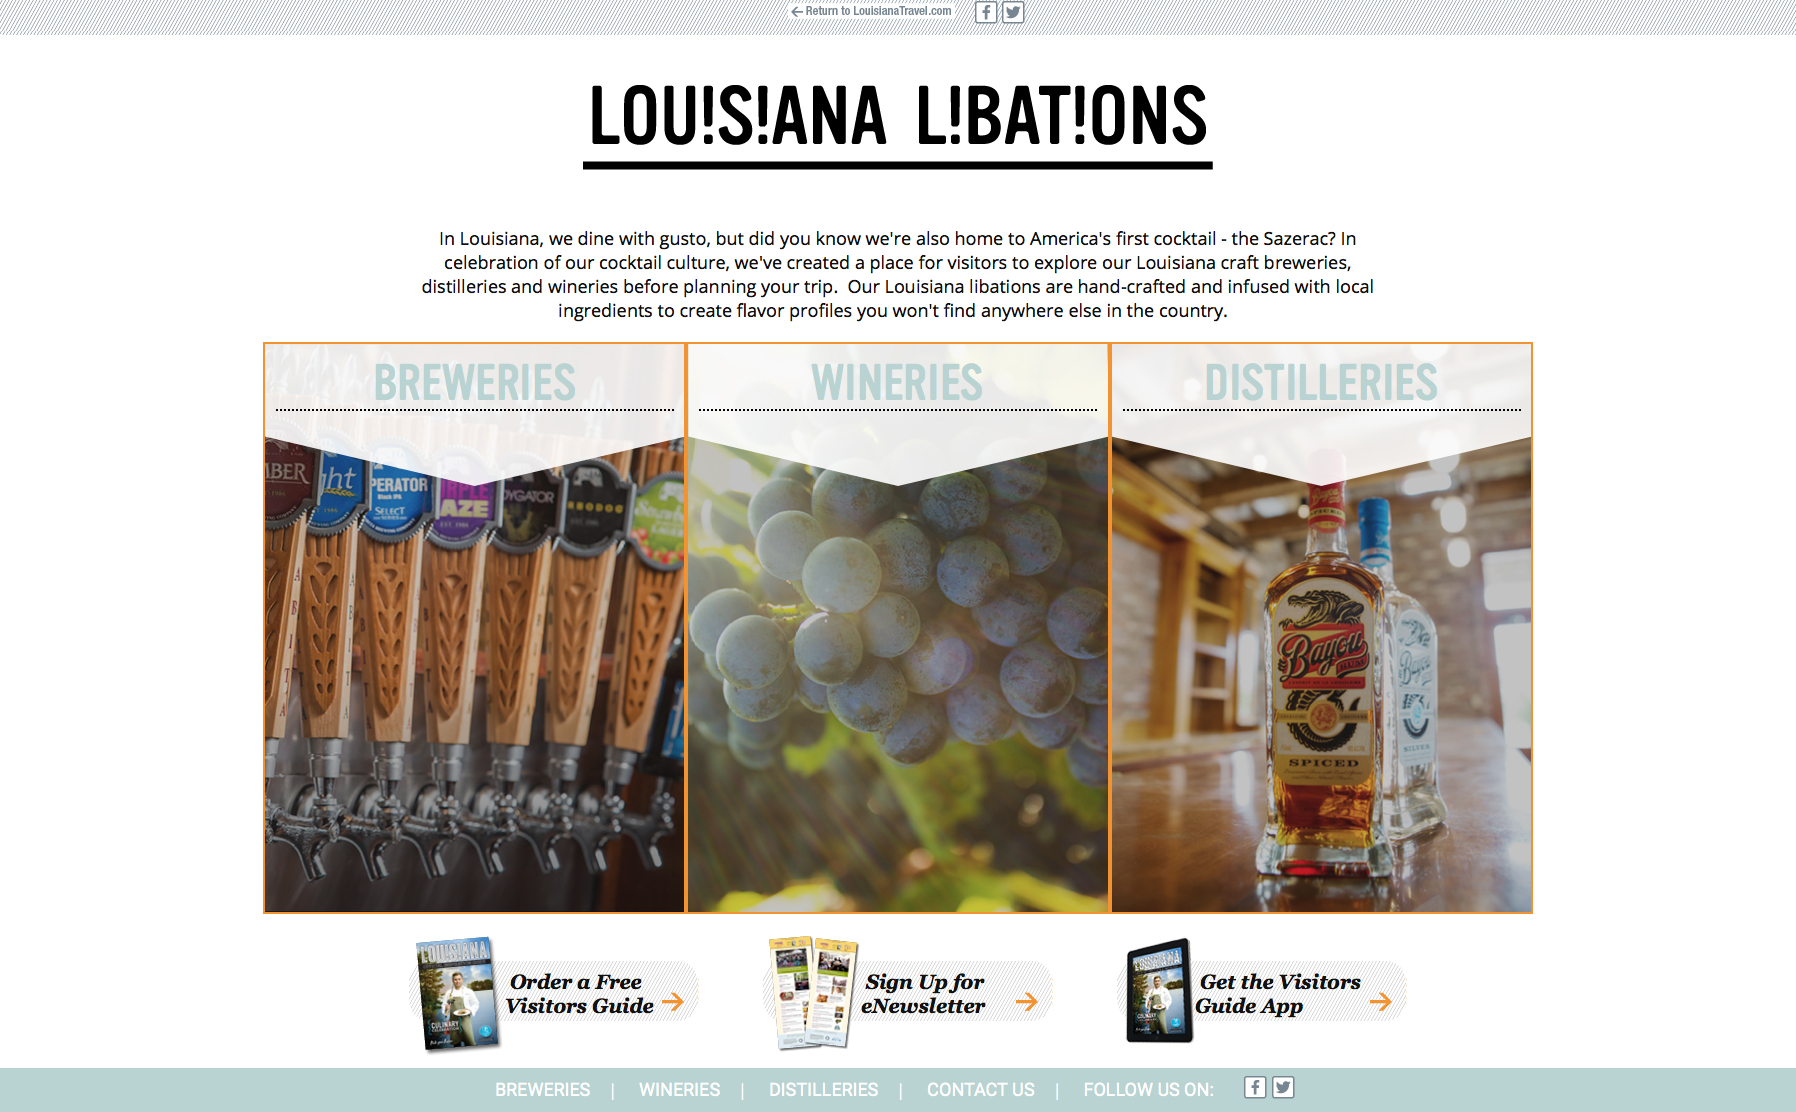 Louisiana Libations Microsite image